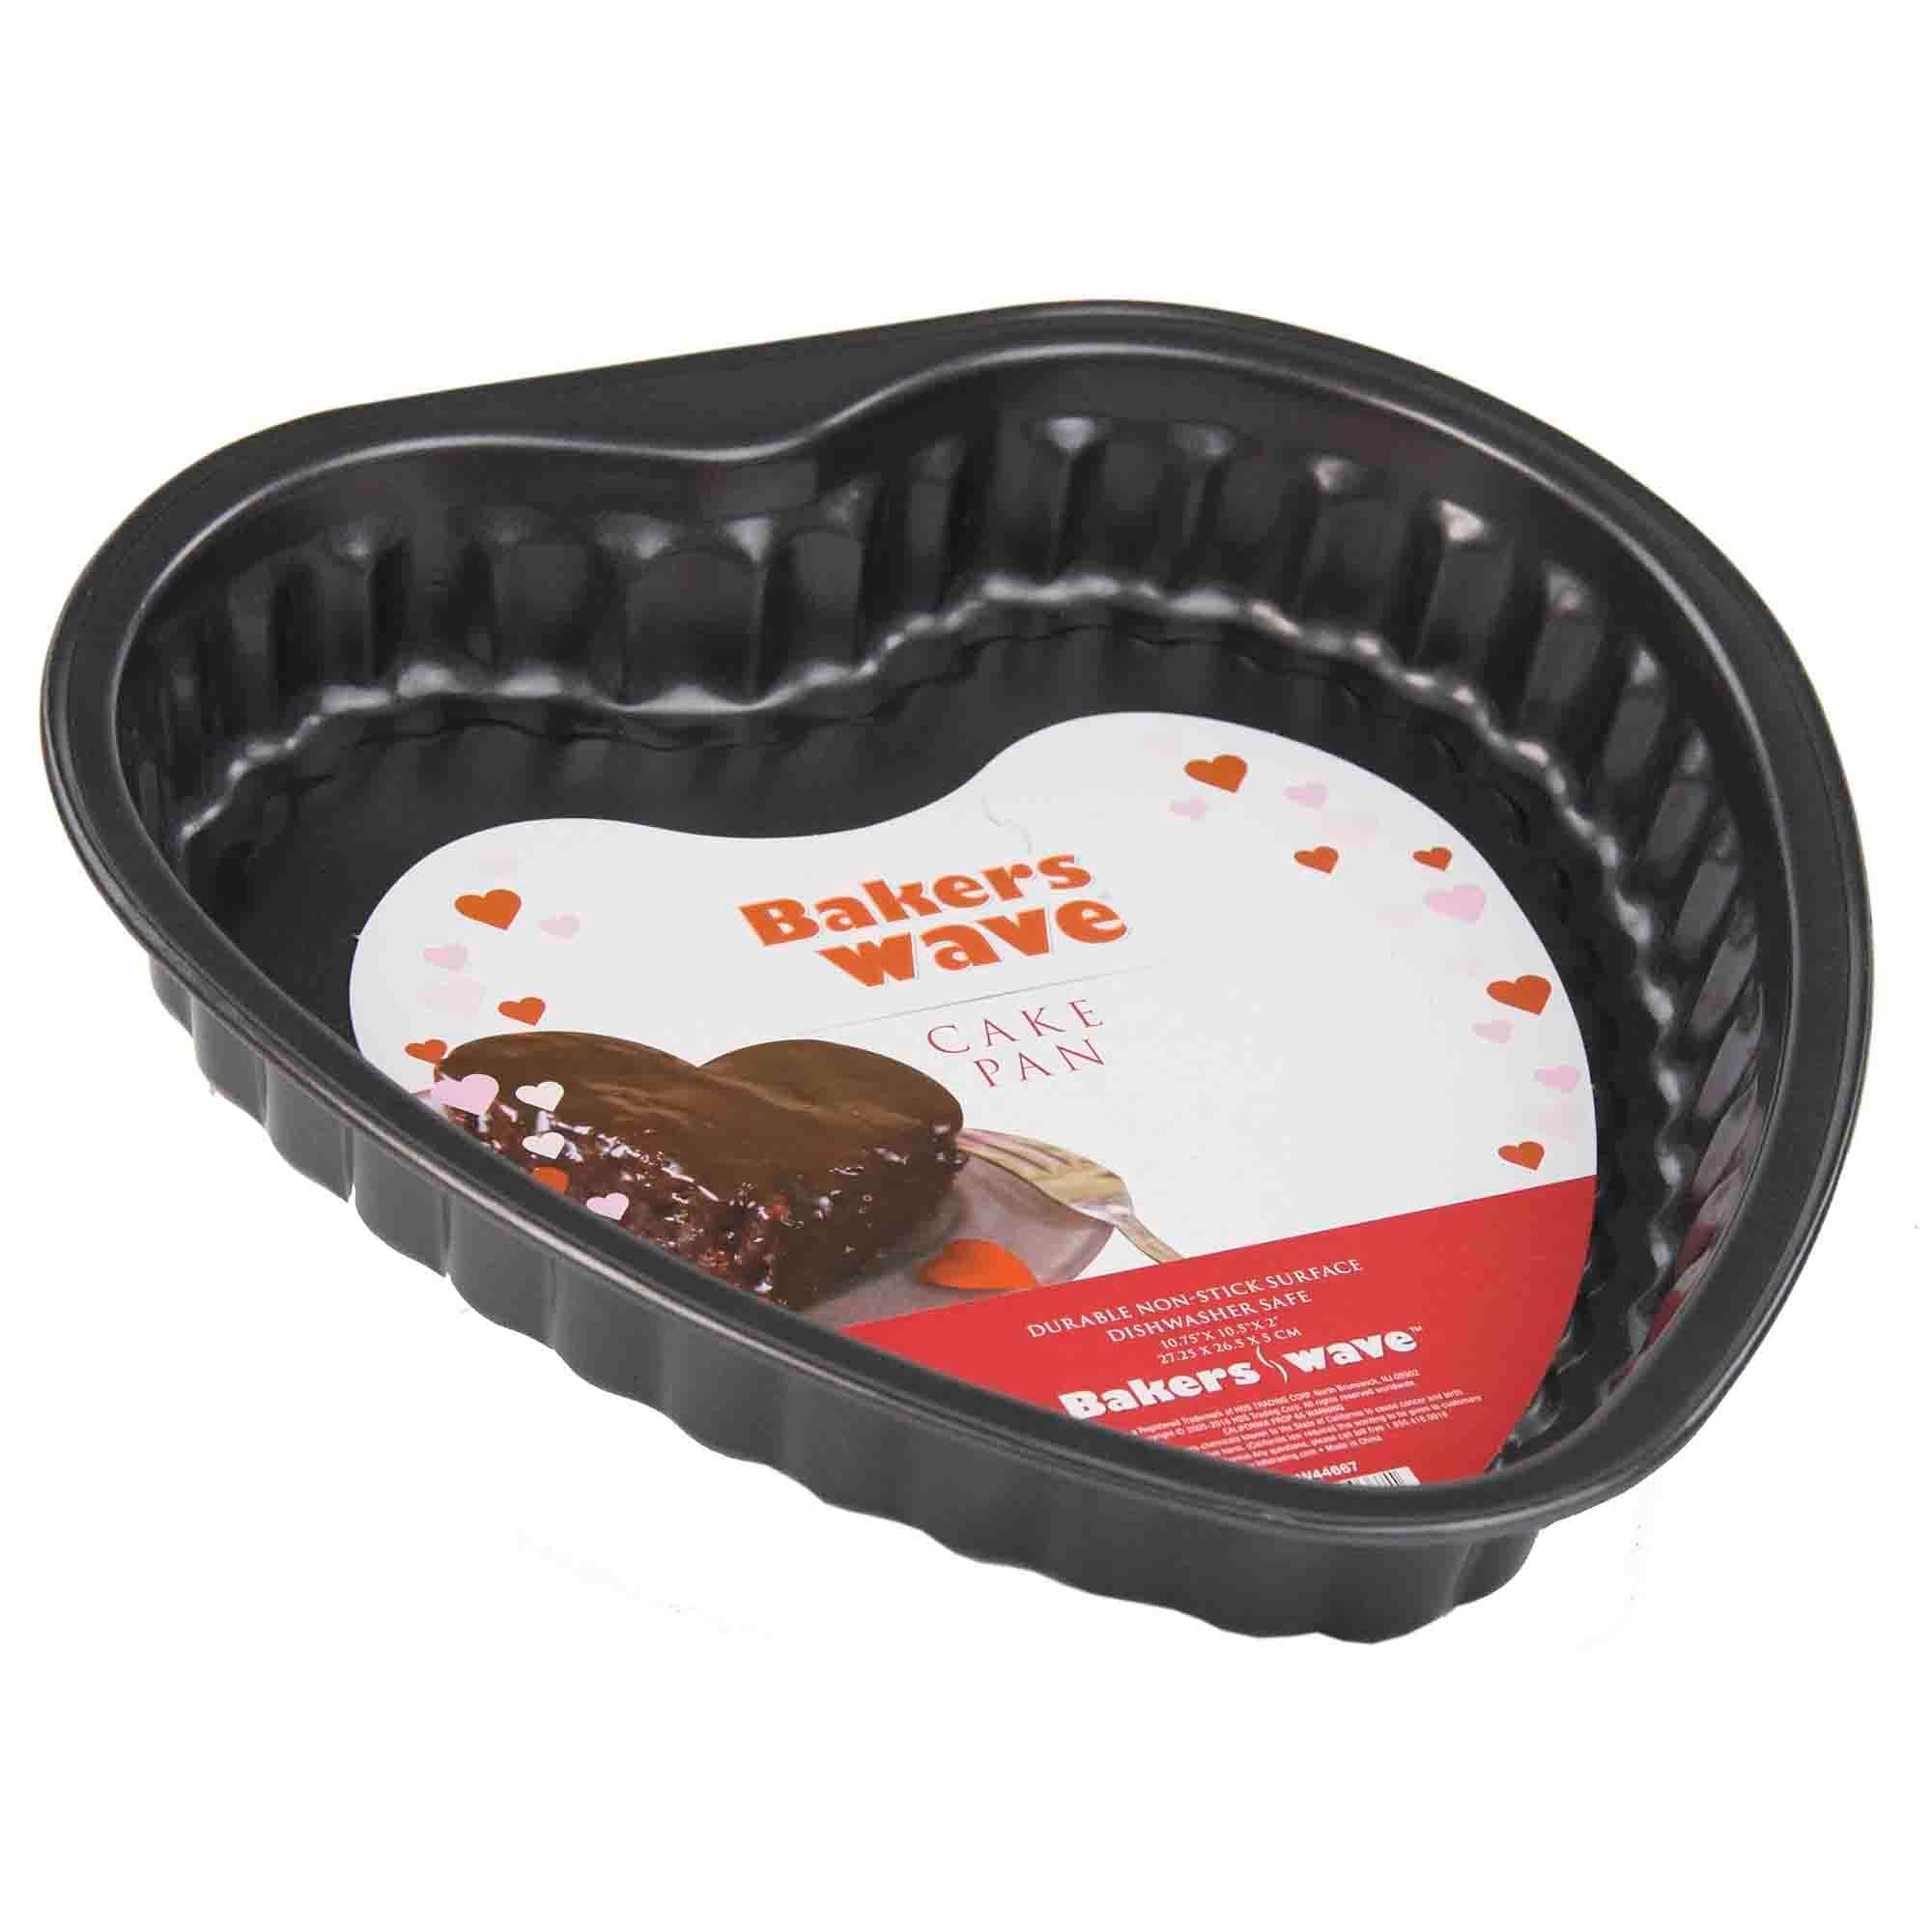 Heart-Shaped Cake Pan, FOOD PREP